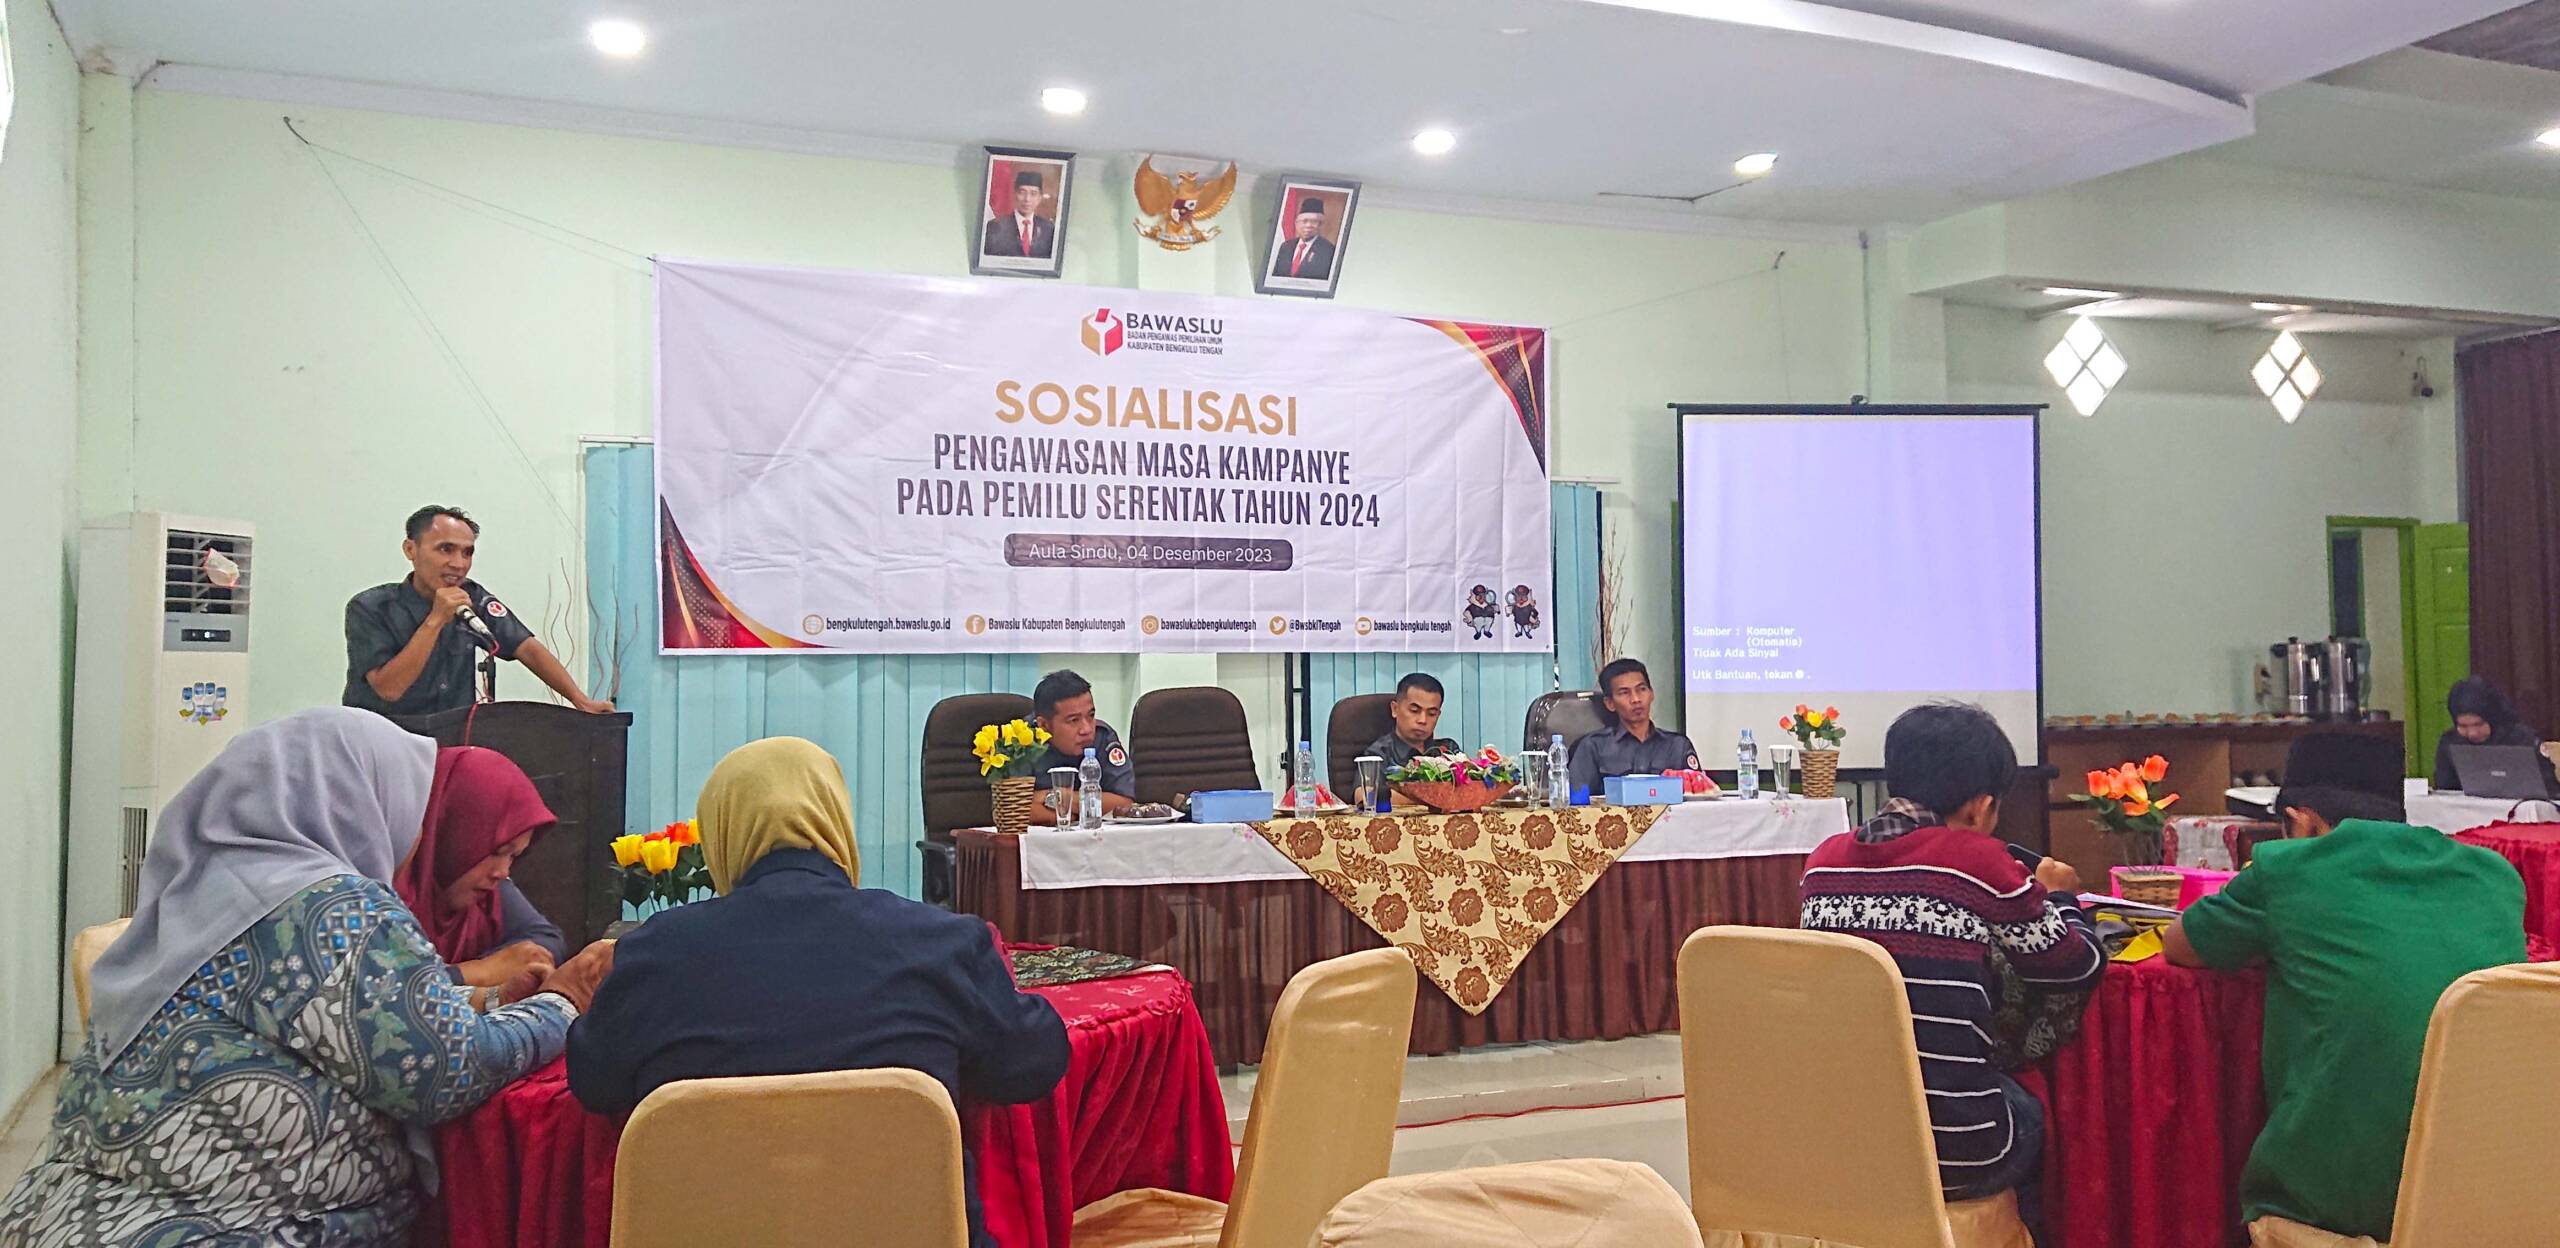 Bawaslu Bengkulu tengah gelar Sosialisasi